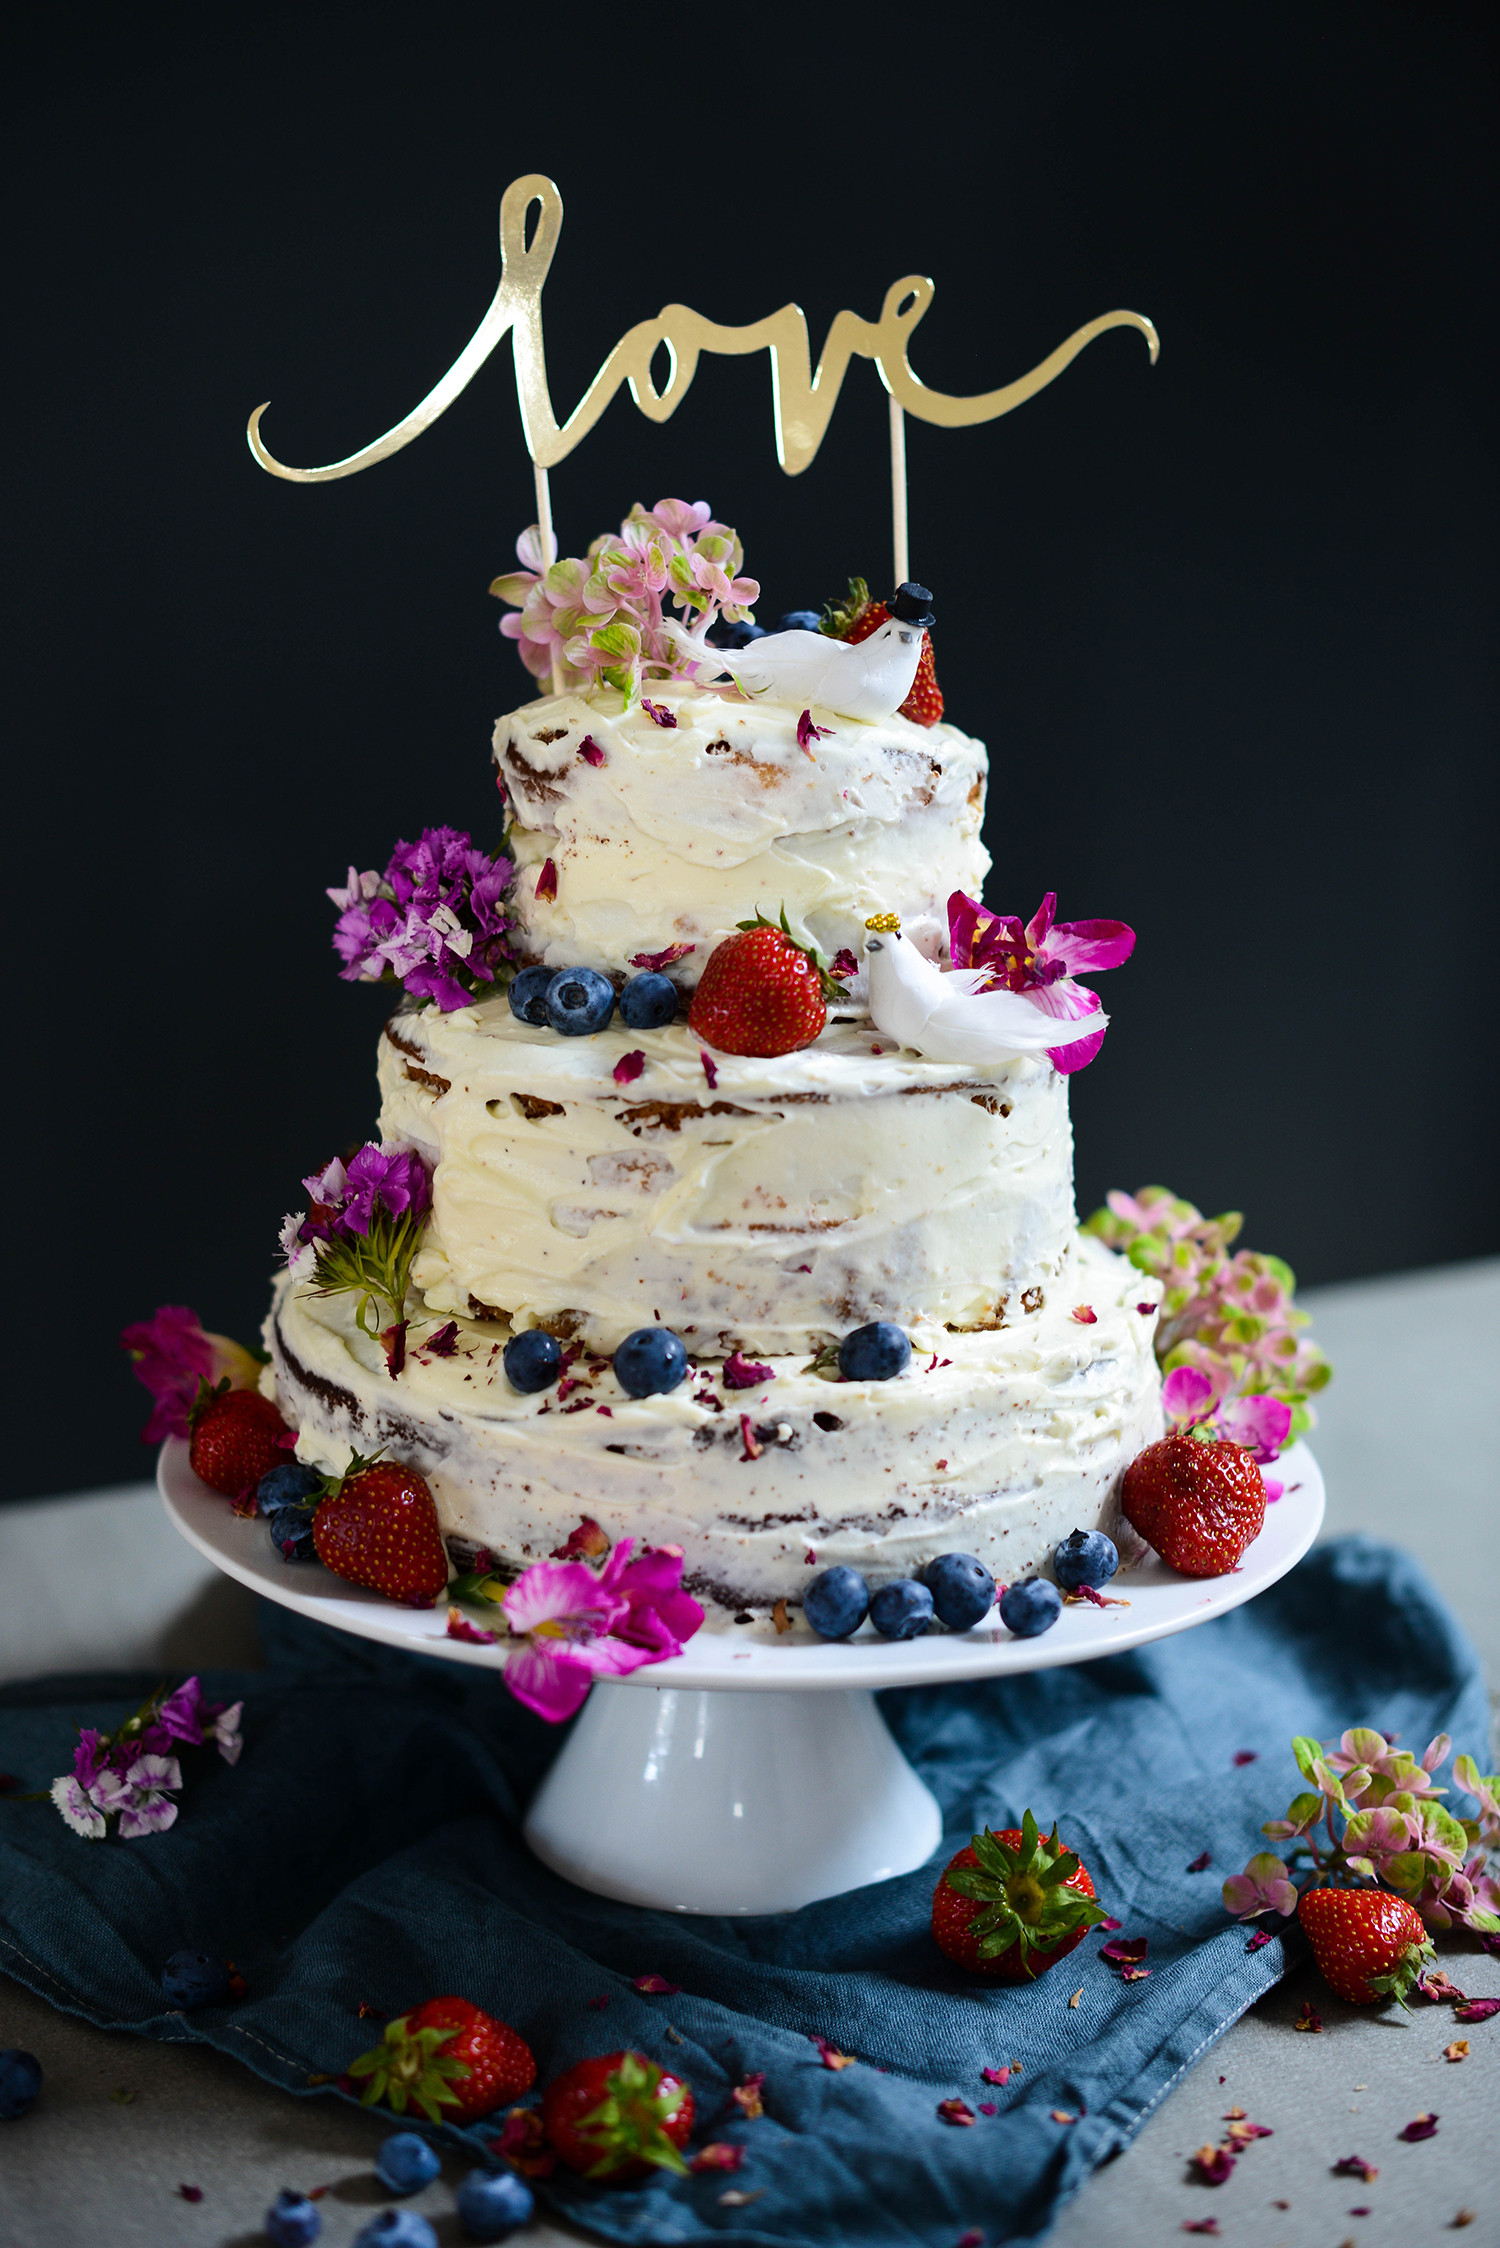 Three Layered Wedding Cakes
 Three layered wedding cake with mascarpone frosting